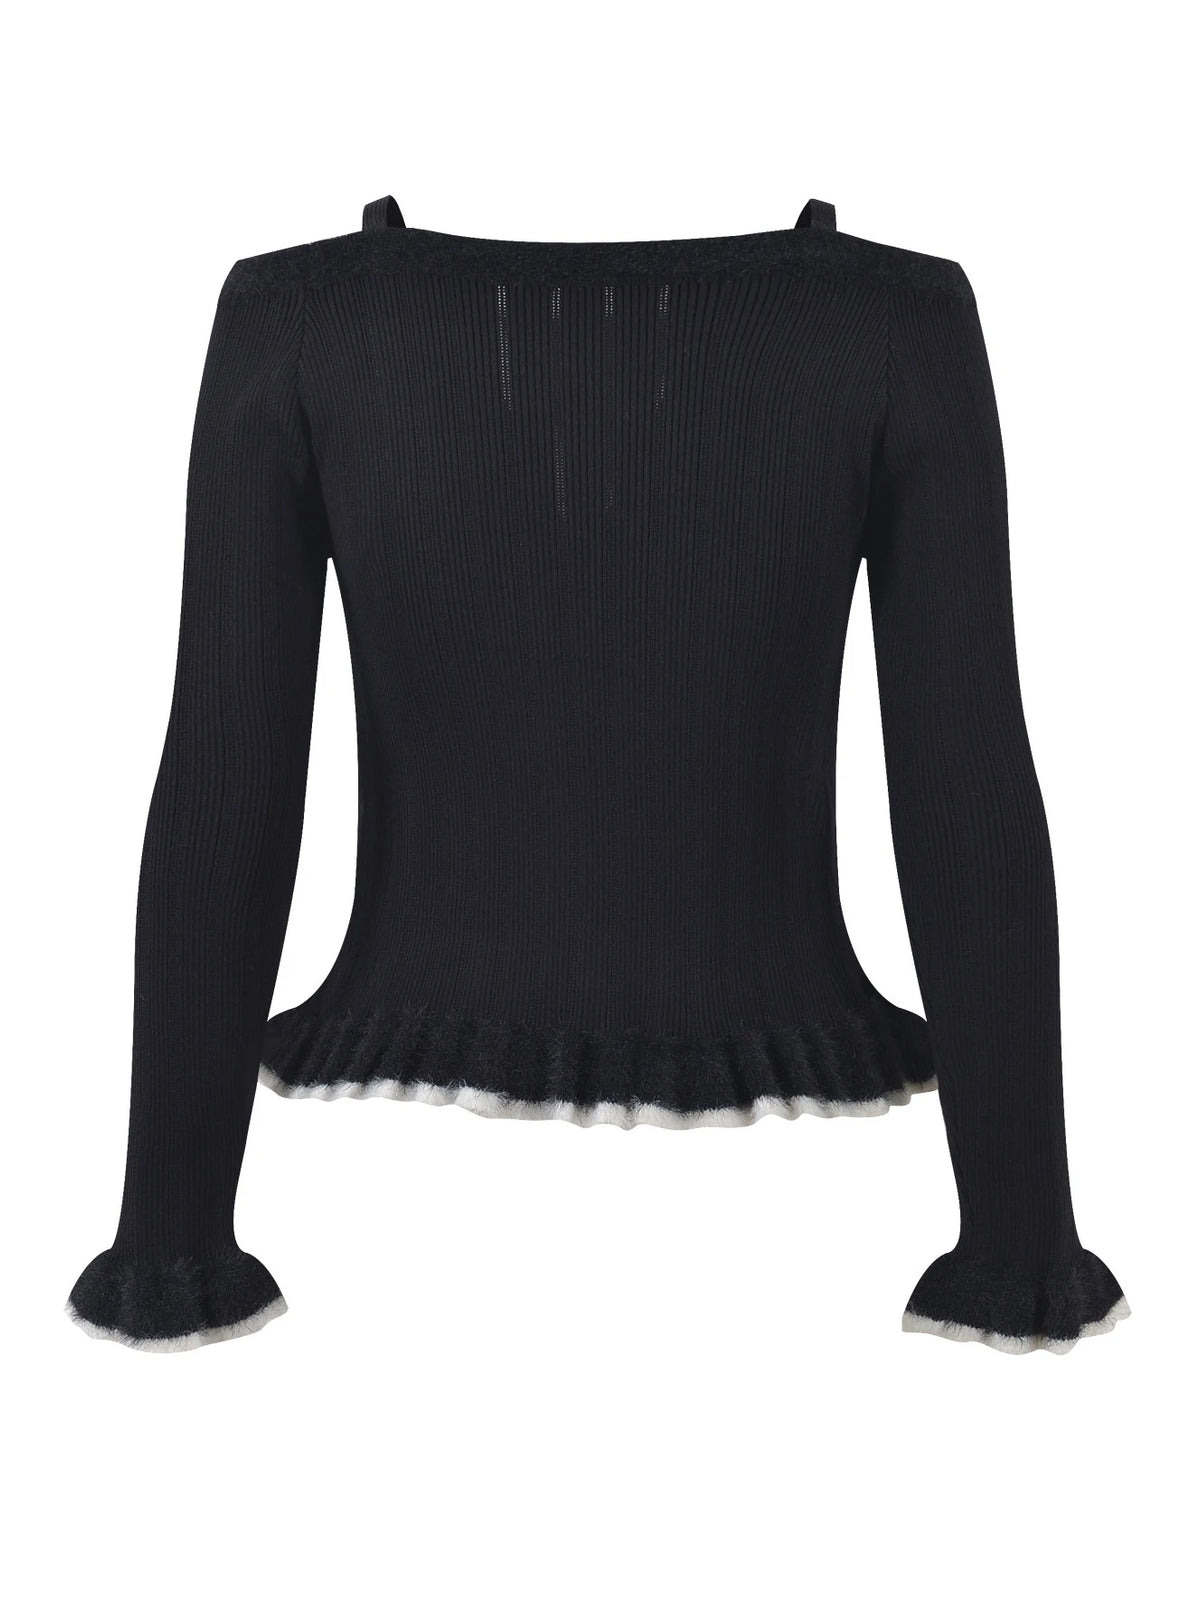 Fashion Elegant Ruffles Tops for Women Luxury Sequined Sweater Mujer Autumn Winter White Black Pull Femme C-262